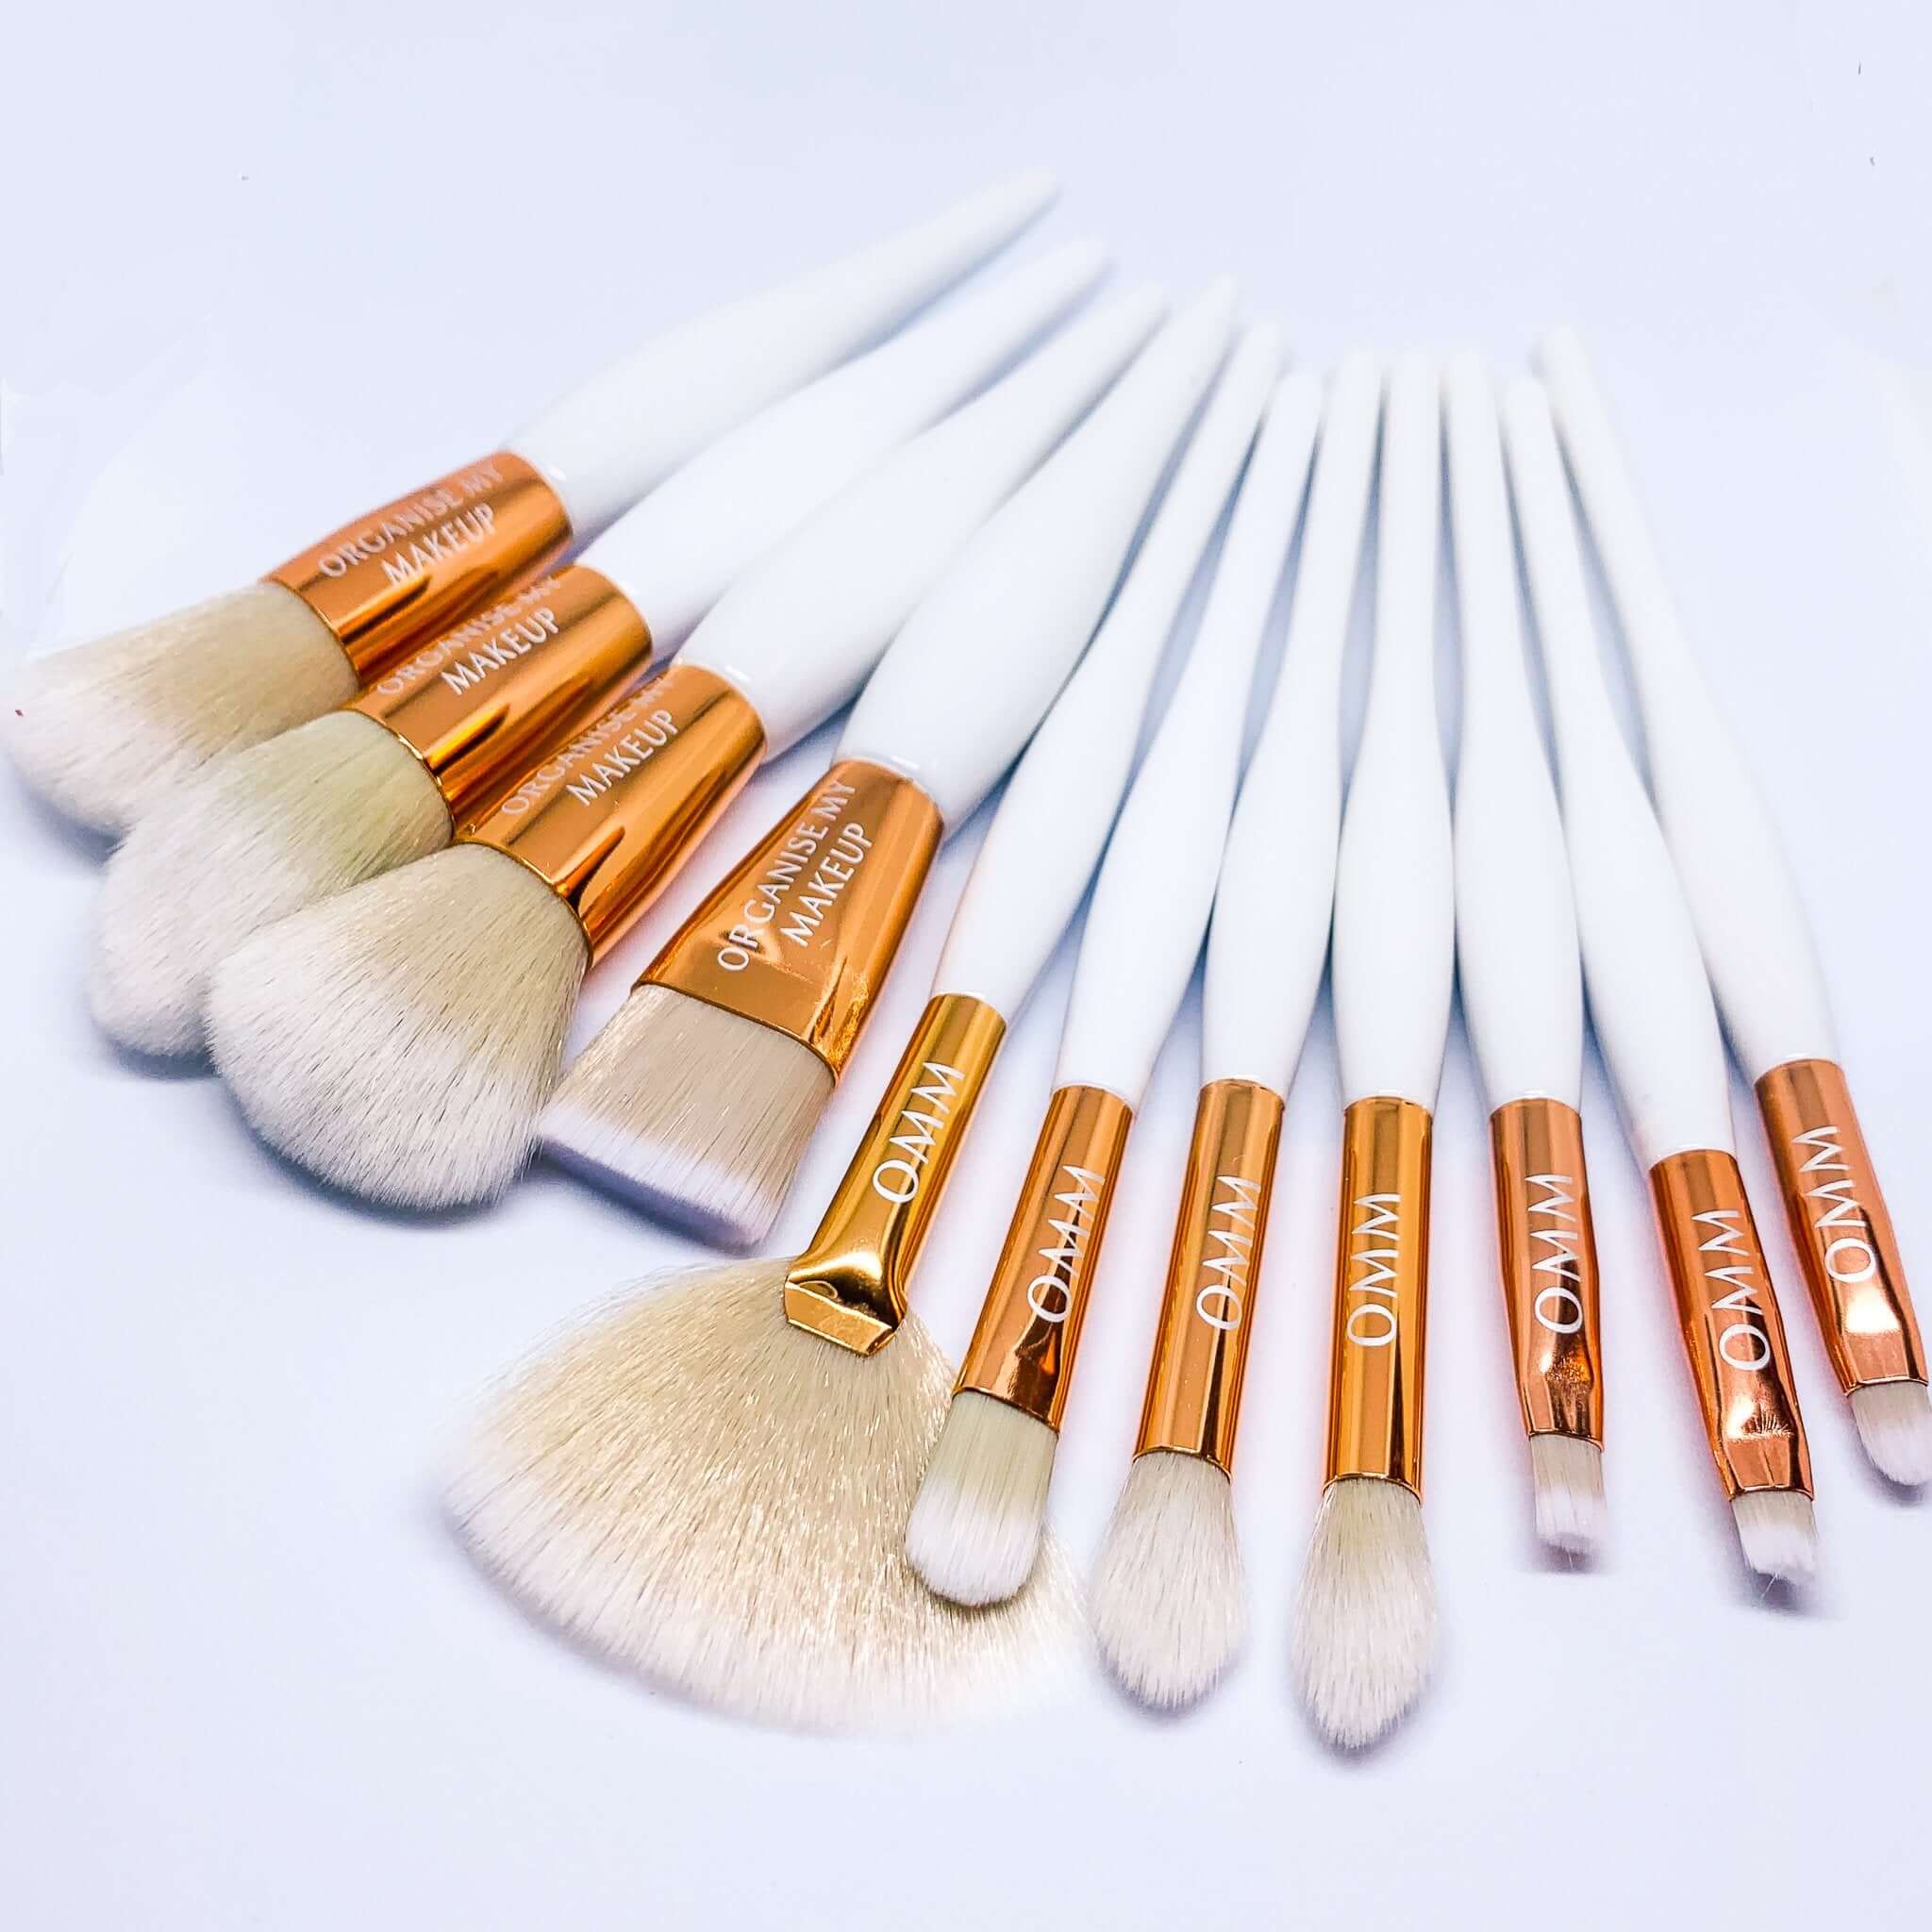 Makeup Tools & Accessories | Organise my makeup 